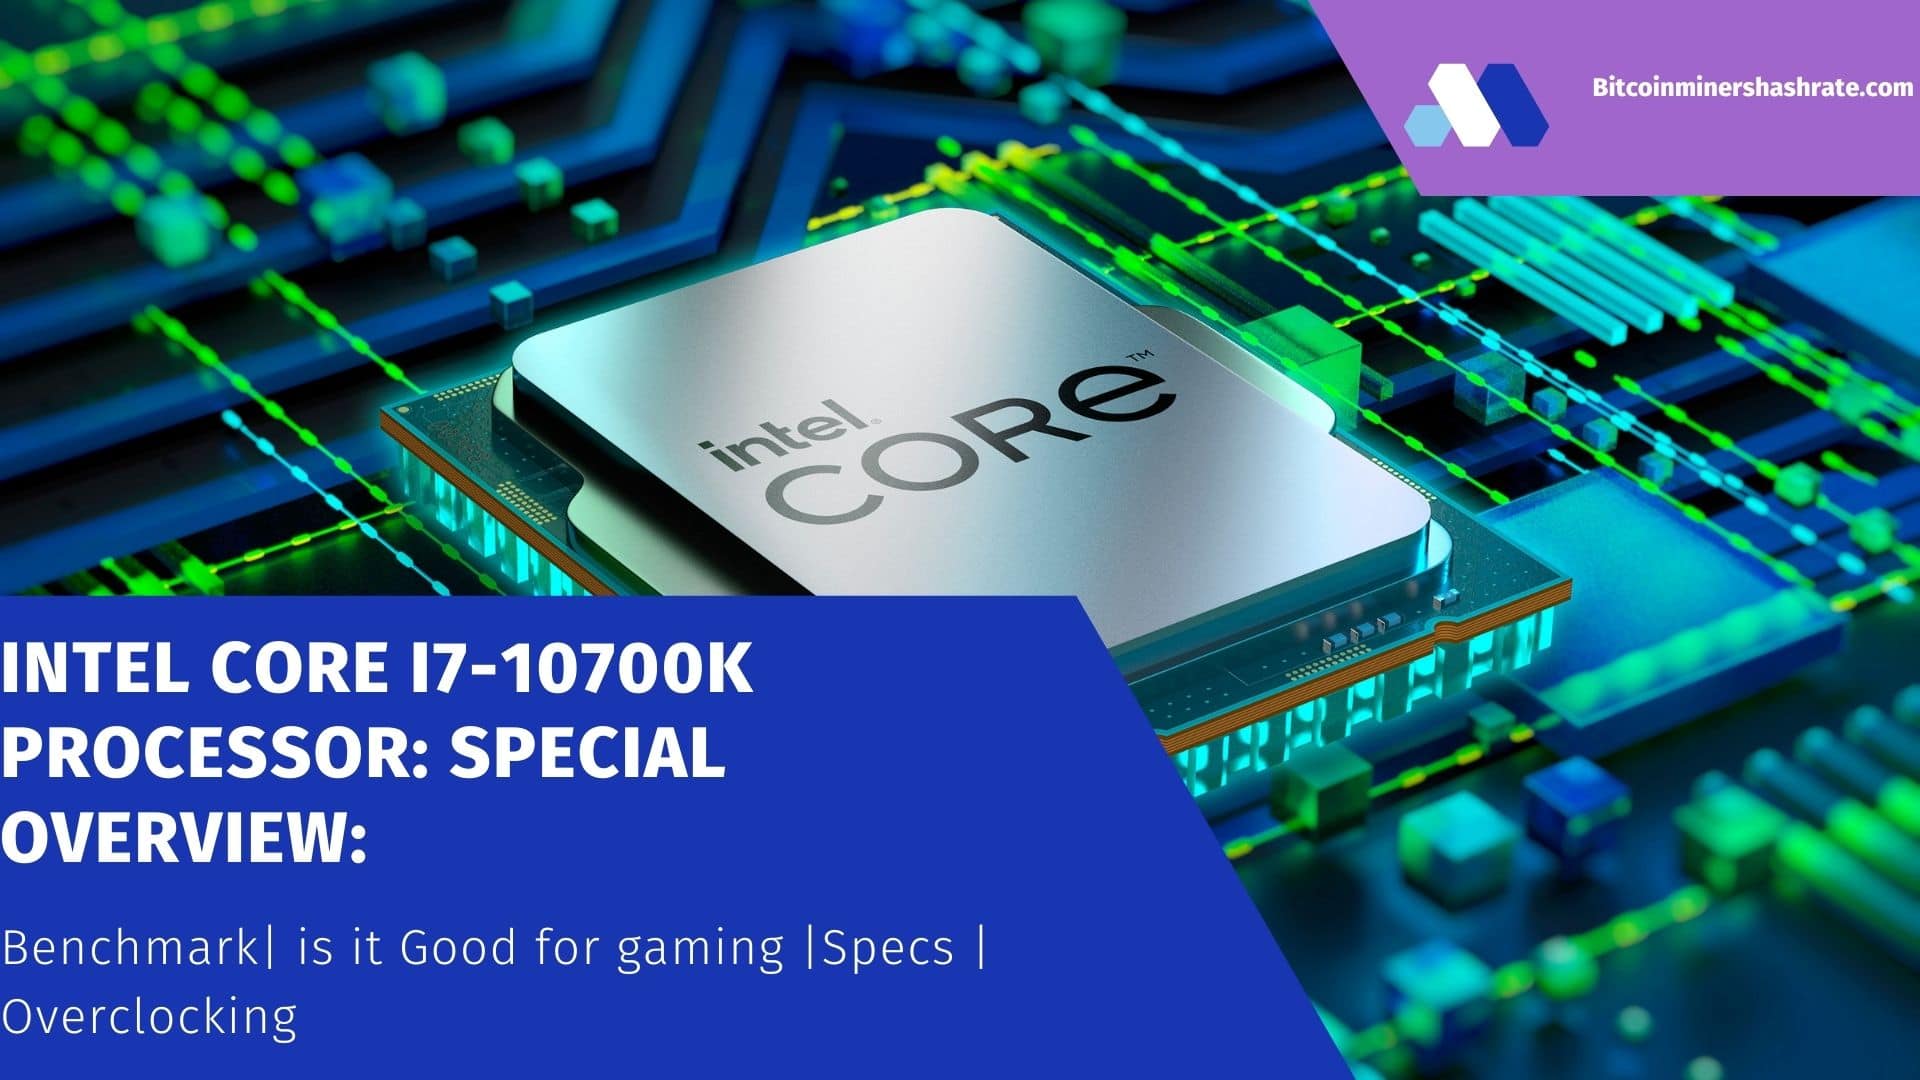 Intel Core i7-10700K Processor